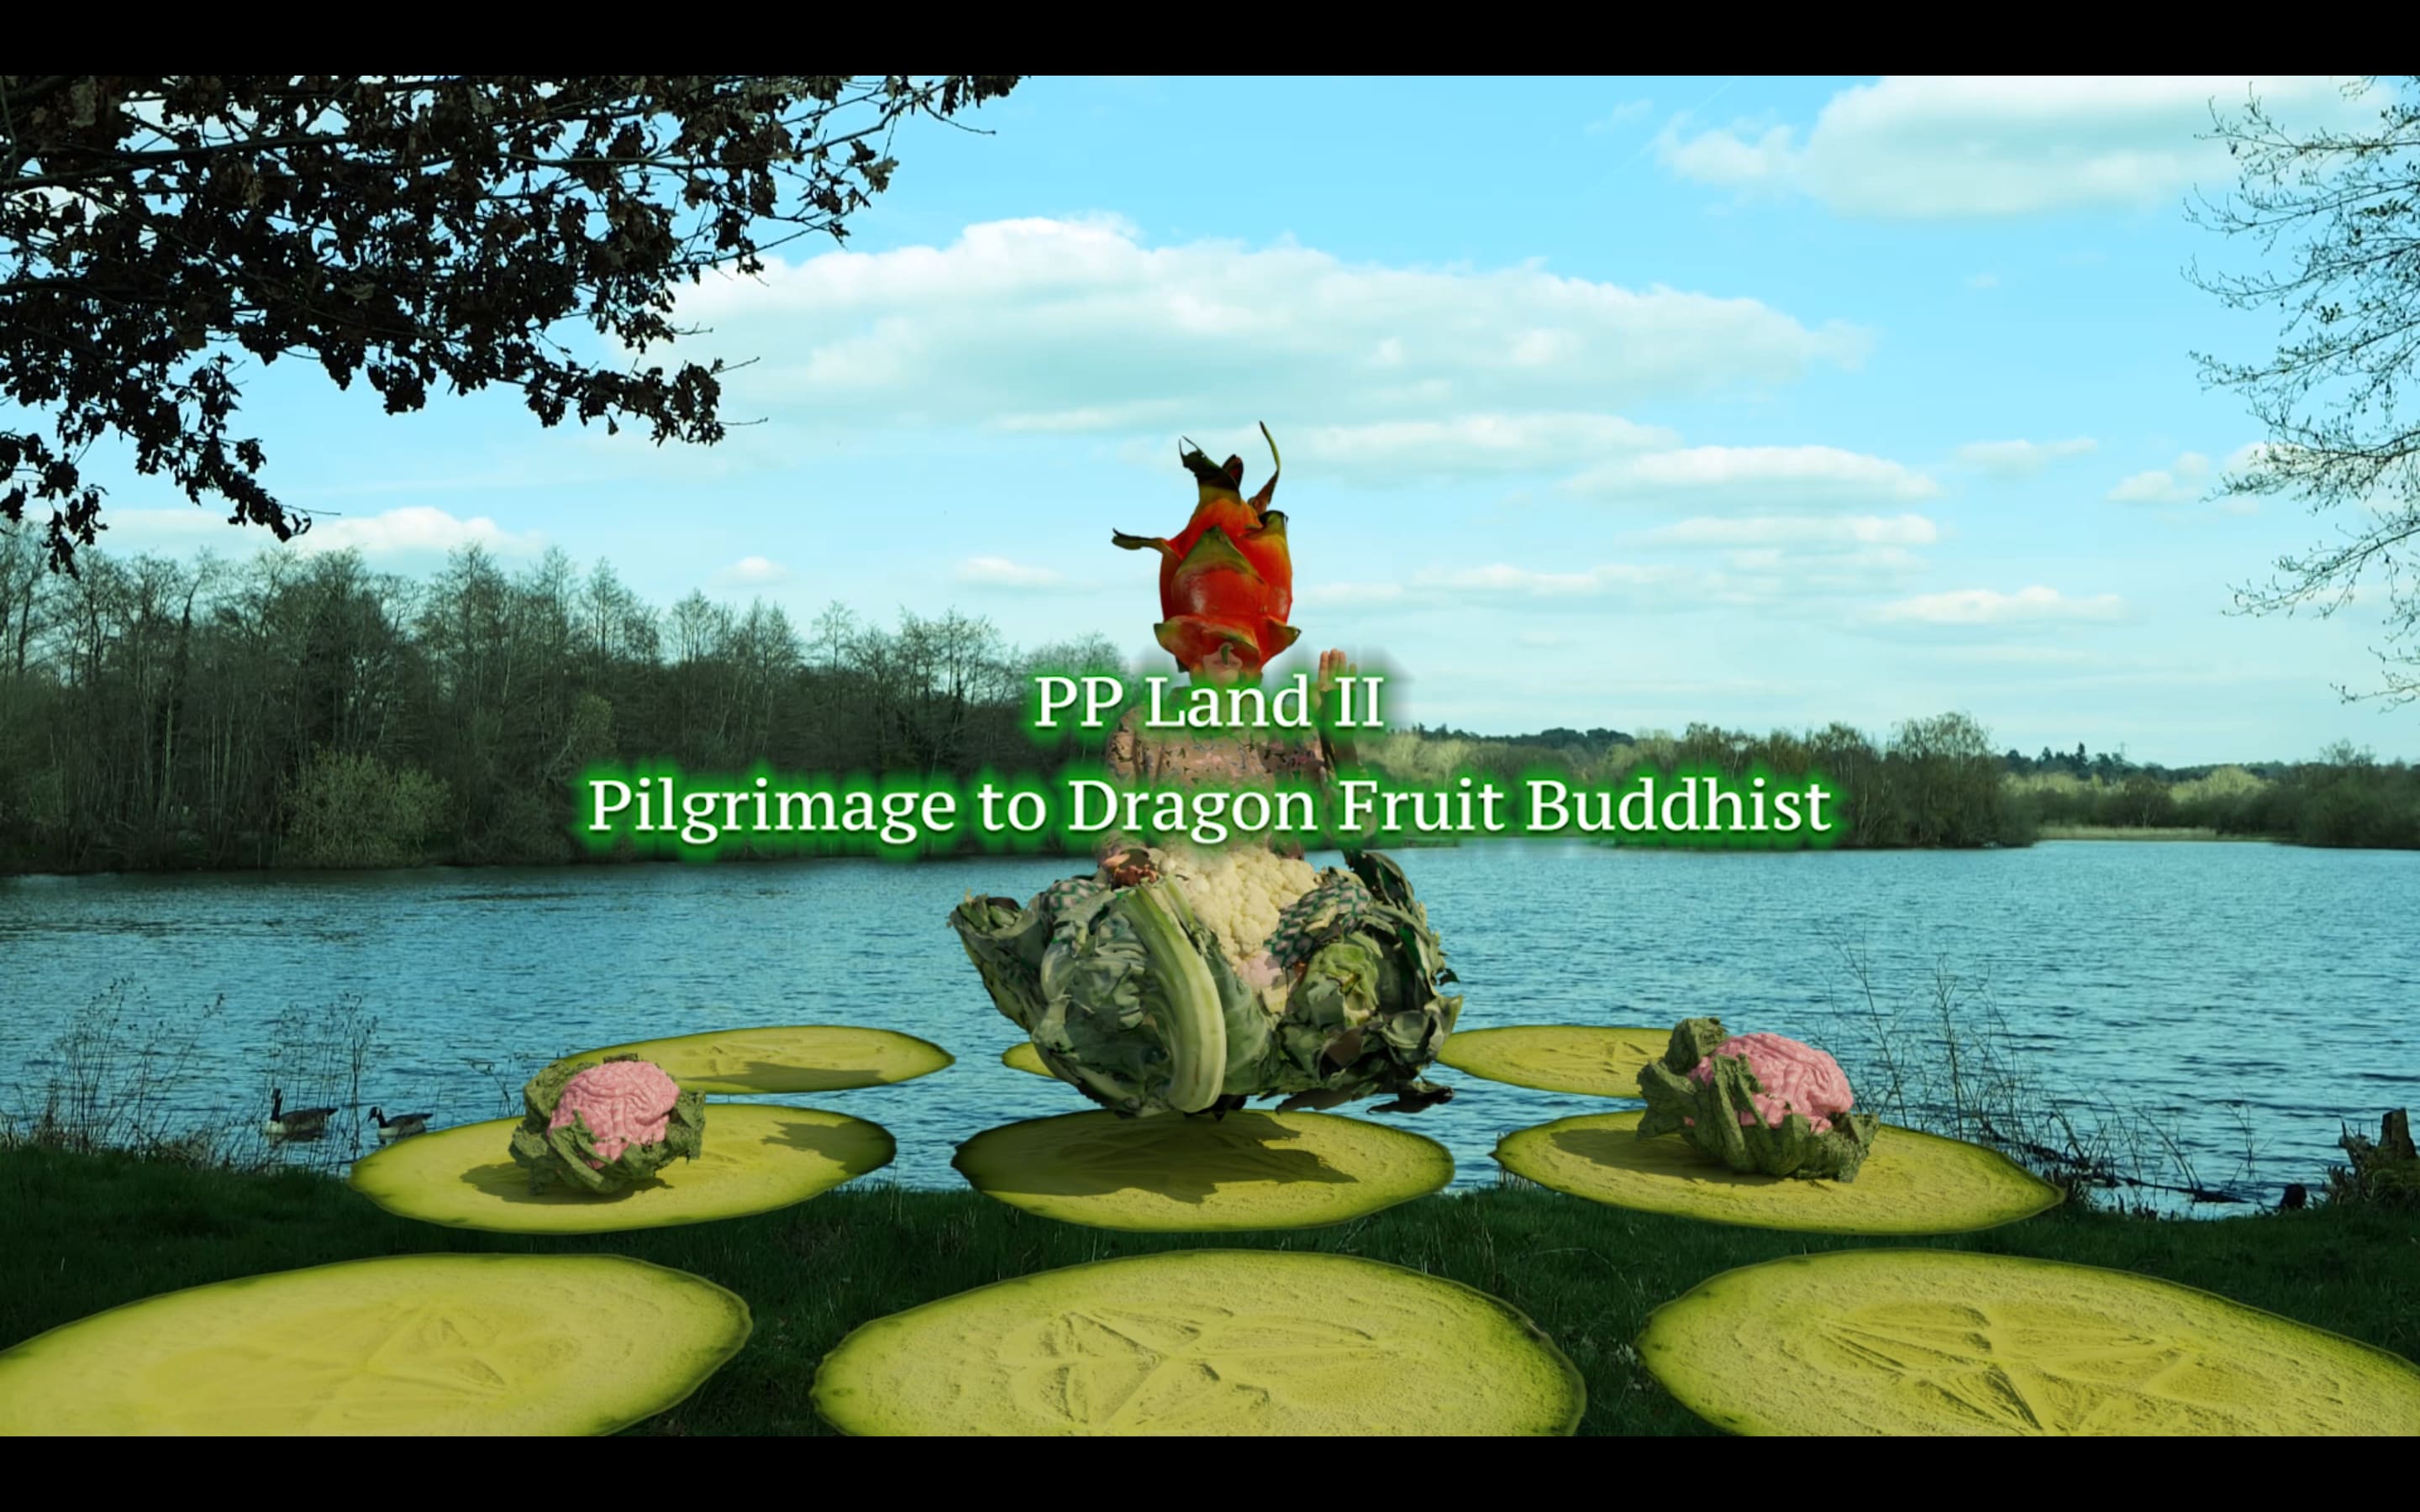 PP Land II-Pilgrimage to the Dragon Fruit Buddhist